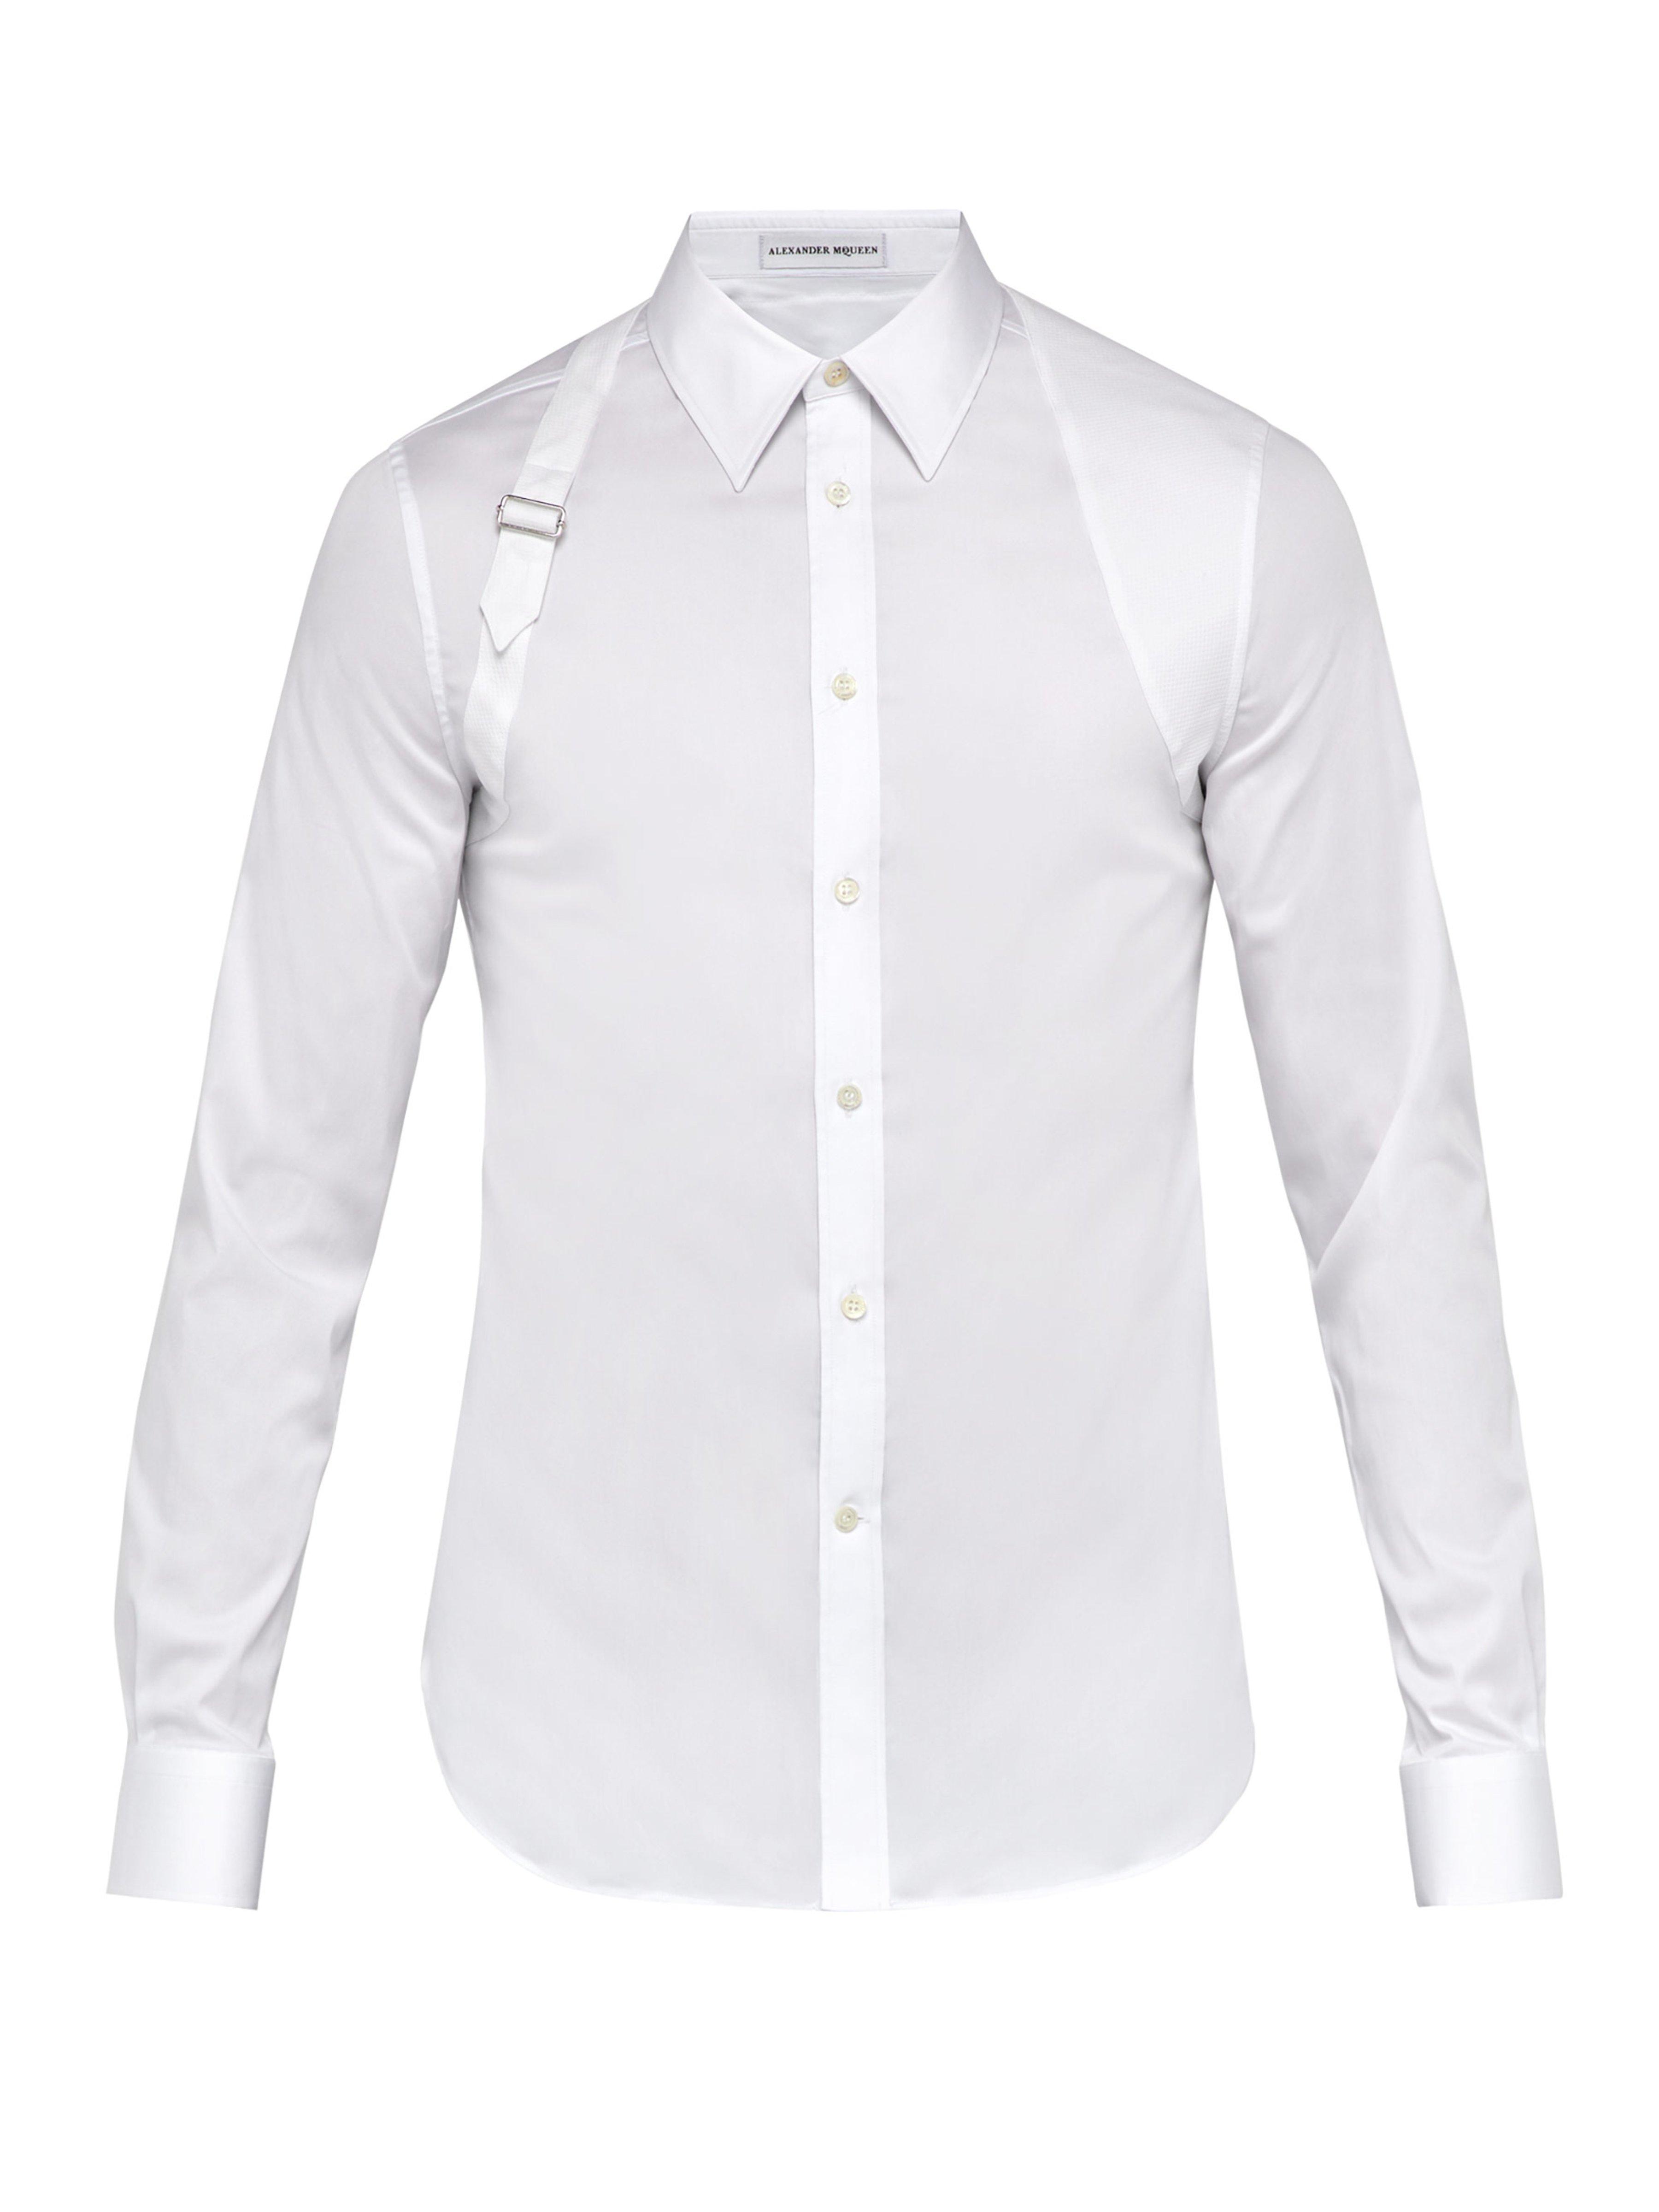 Alexander McQueen Harness Cotton Blend Shirt in White for Men - Lyst